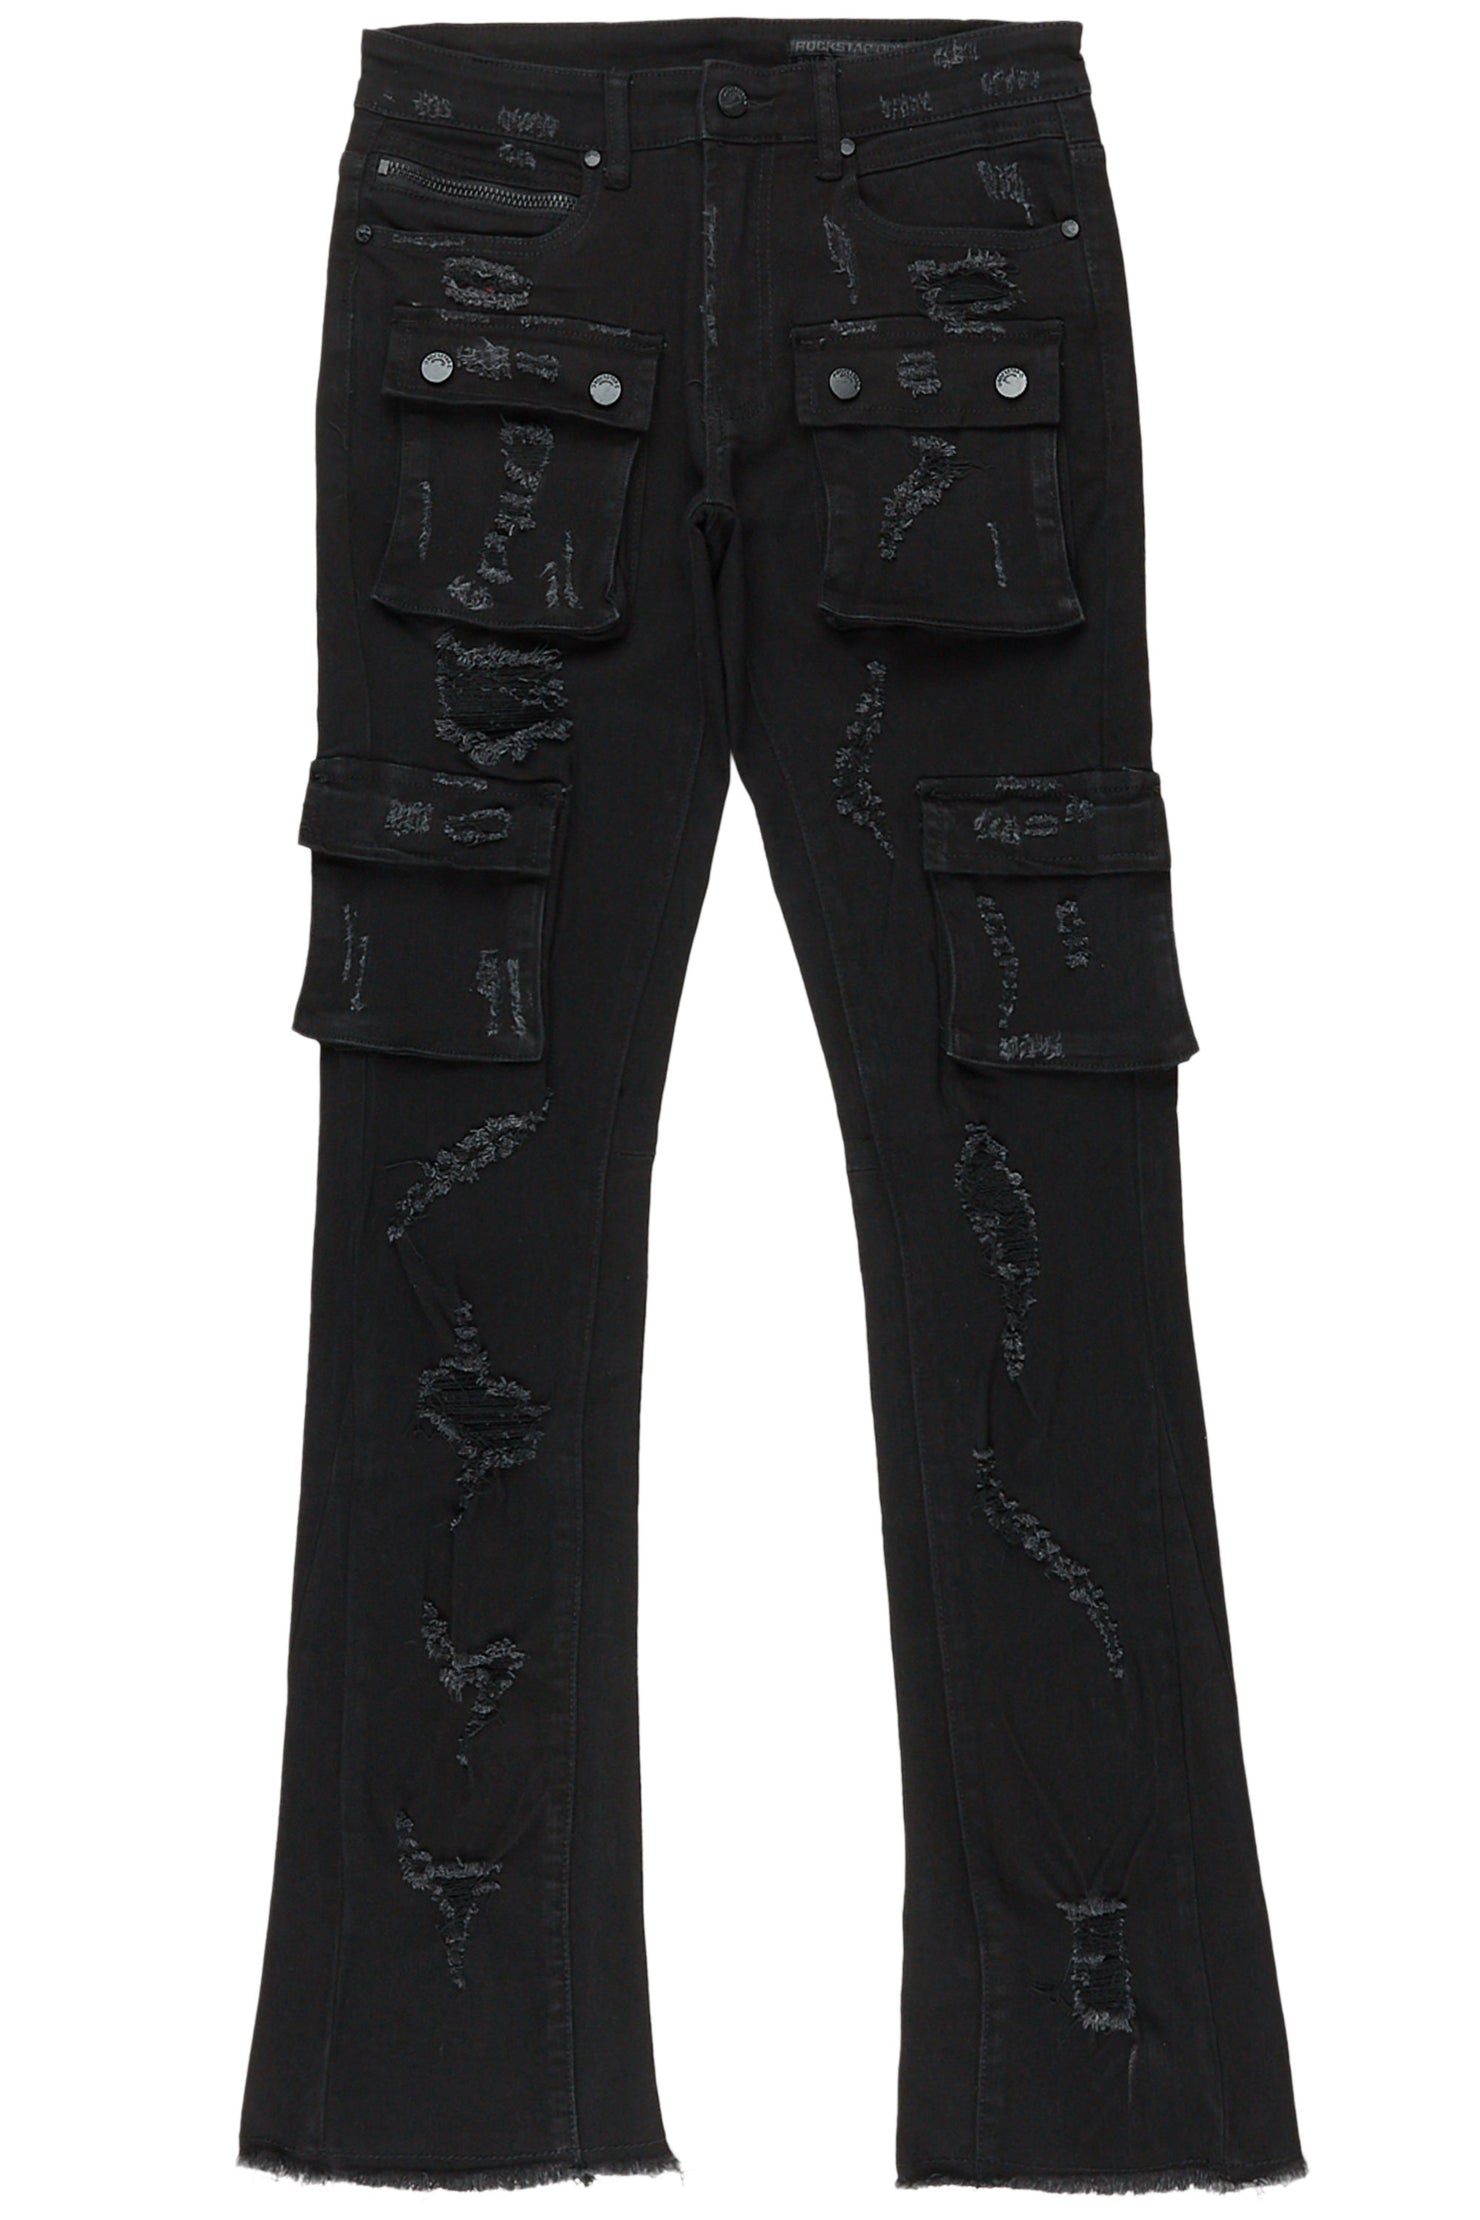 Adriel Black Cargo Stacked Flare Jean– Rockstar Original